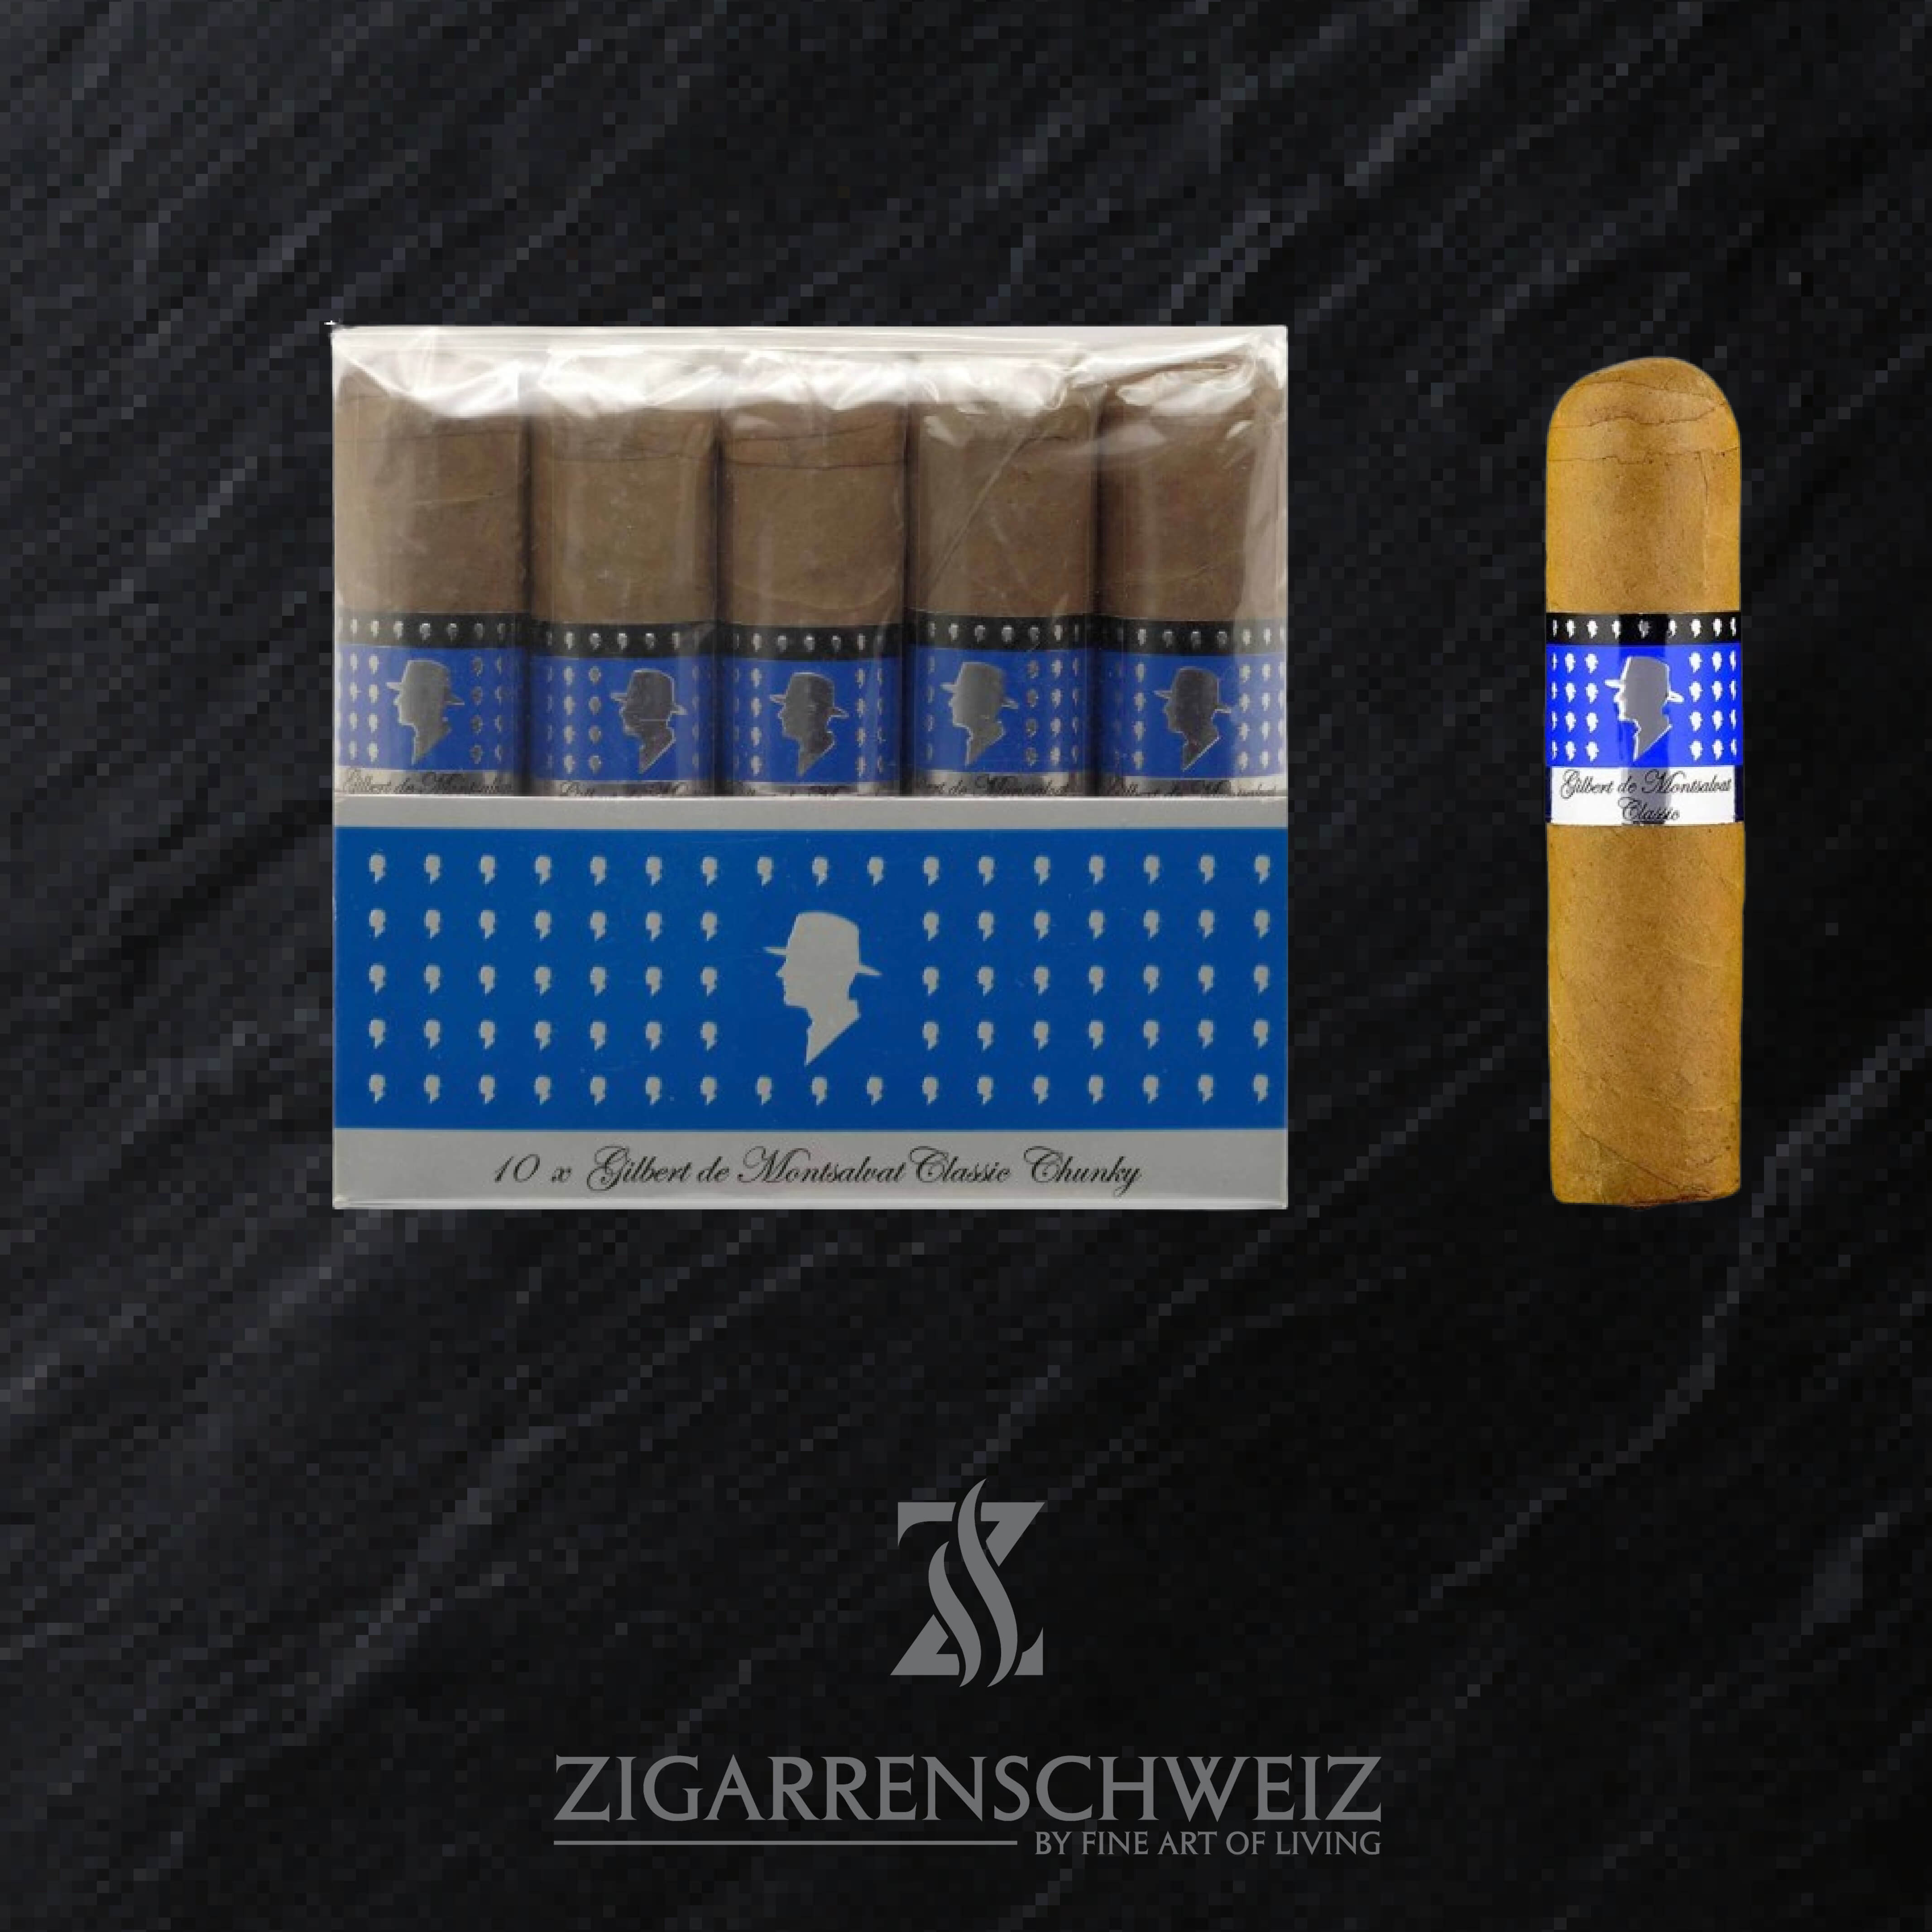 Gilbert de Montsalvat Classic Chunky Zigarren Bundle